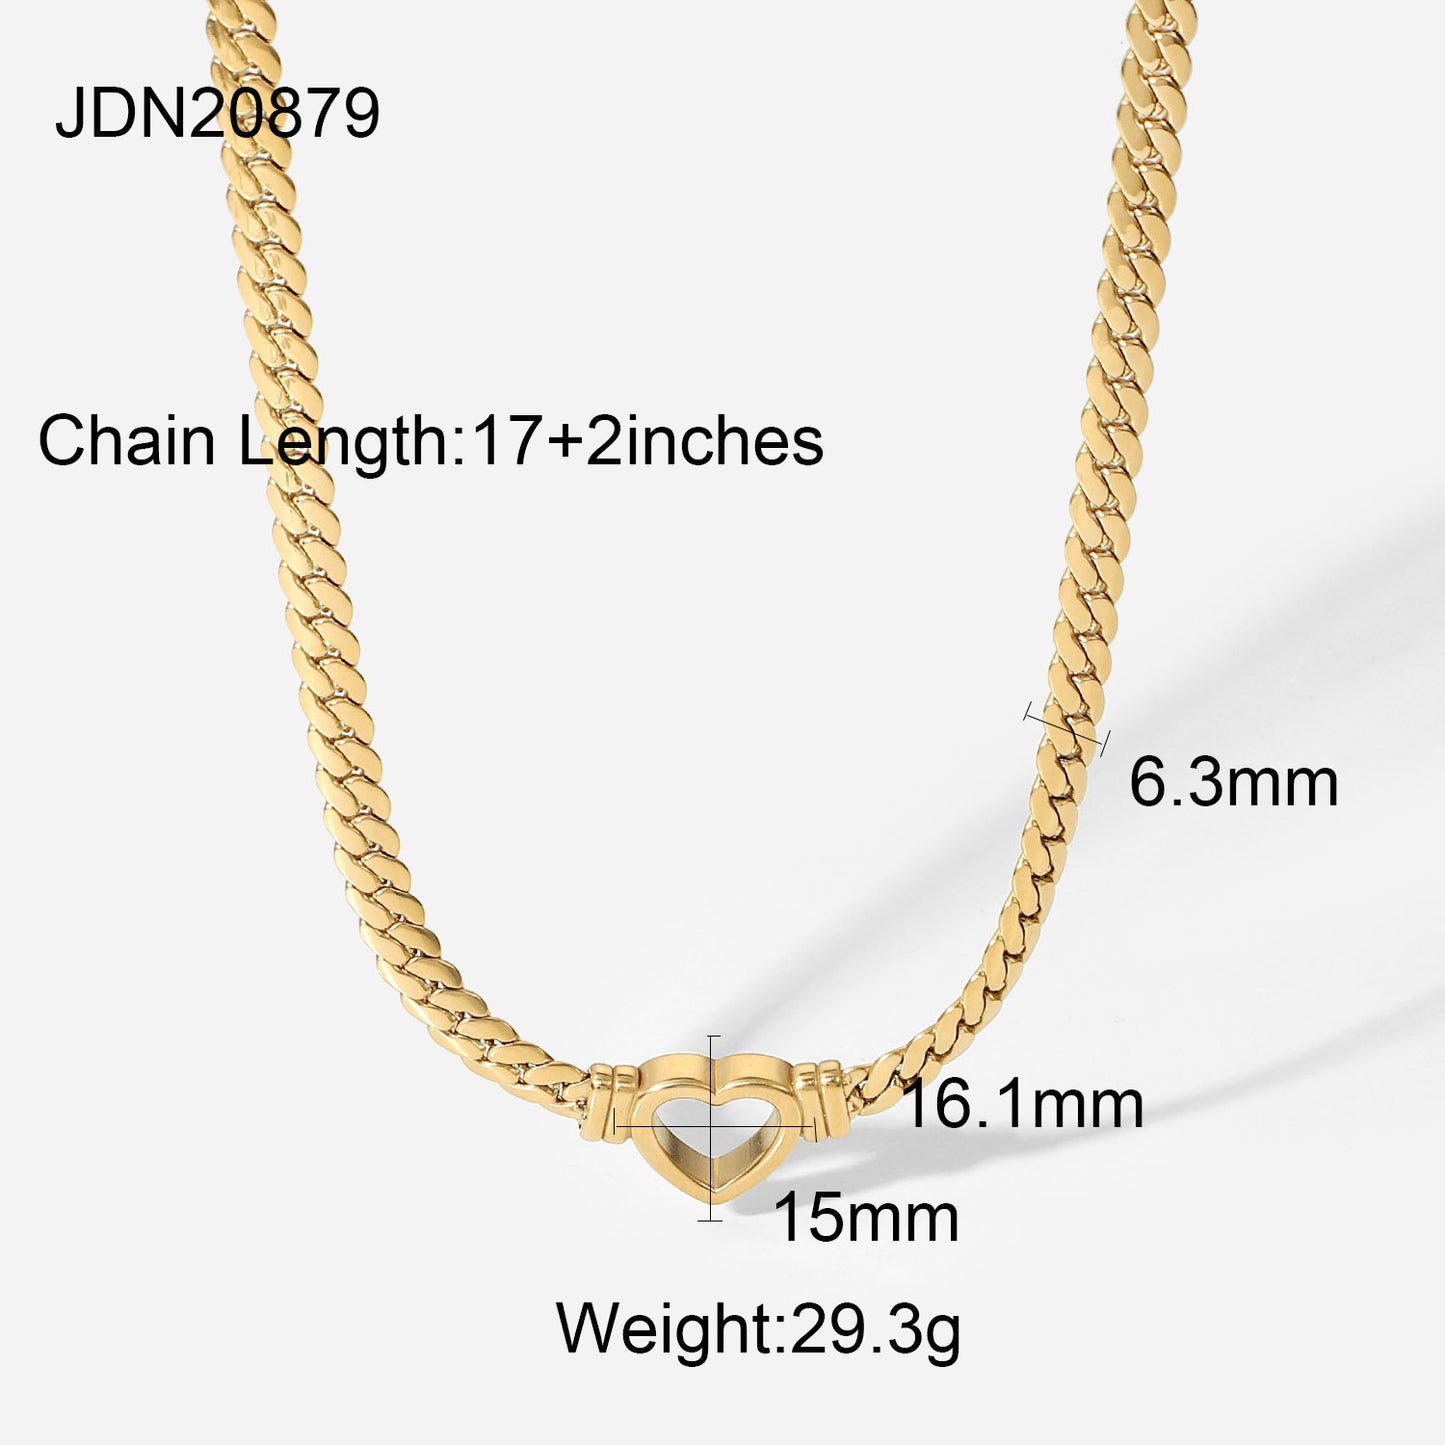 Cuban Chain Heart Necklace 14K